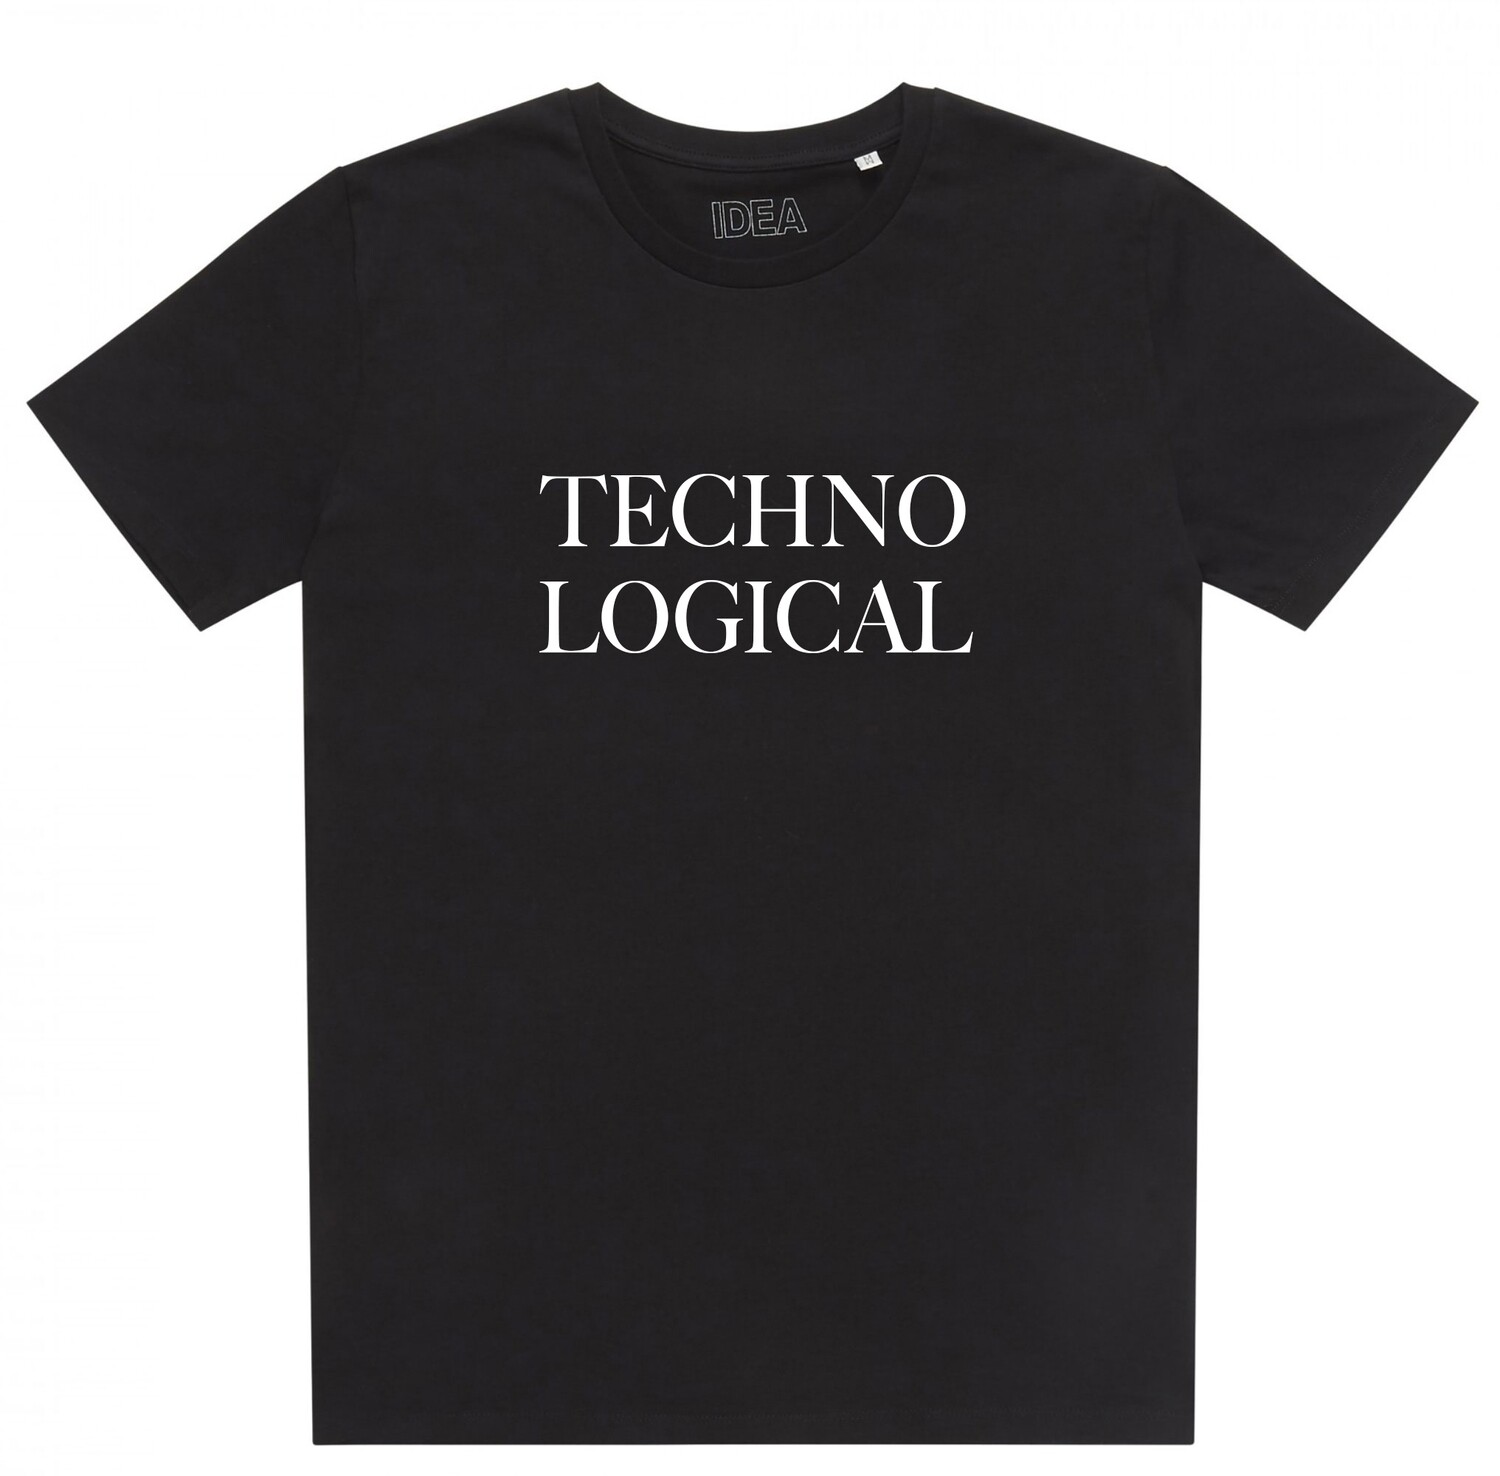 TECHNO LOGICAL T-Shirt, SIZE: M